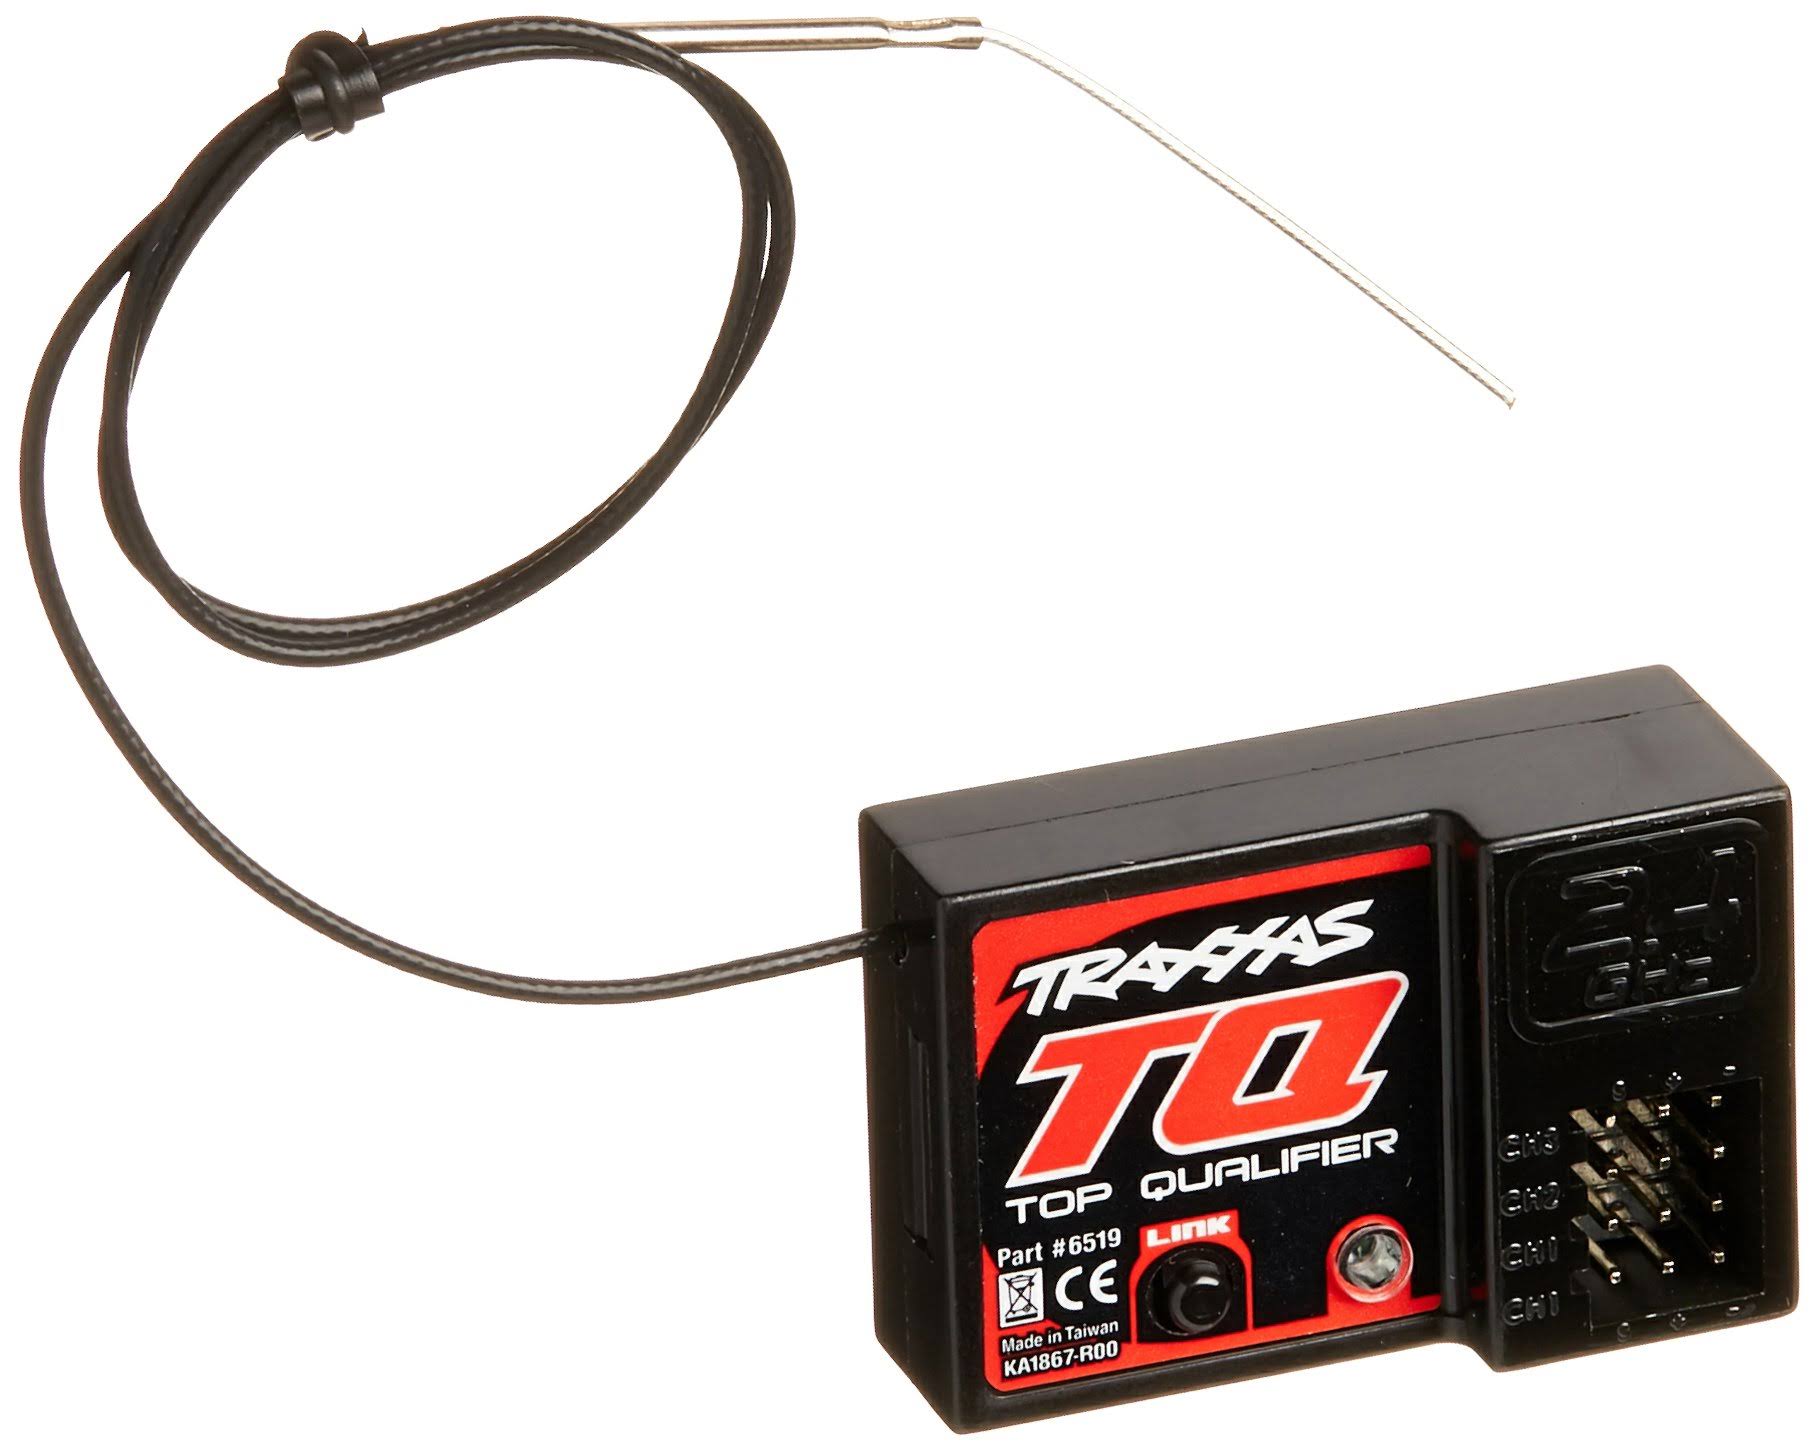 Traxxas Micro TQ Receiver - 2.4GHz, 3 Channel